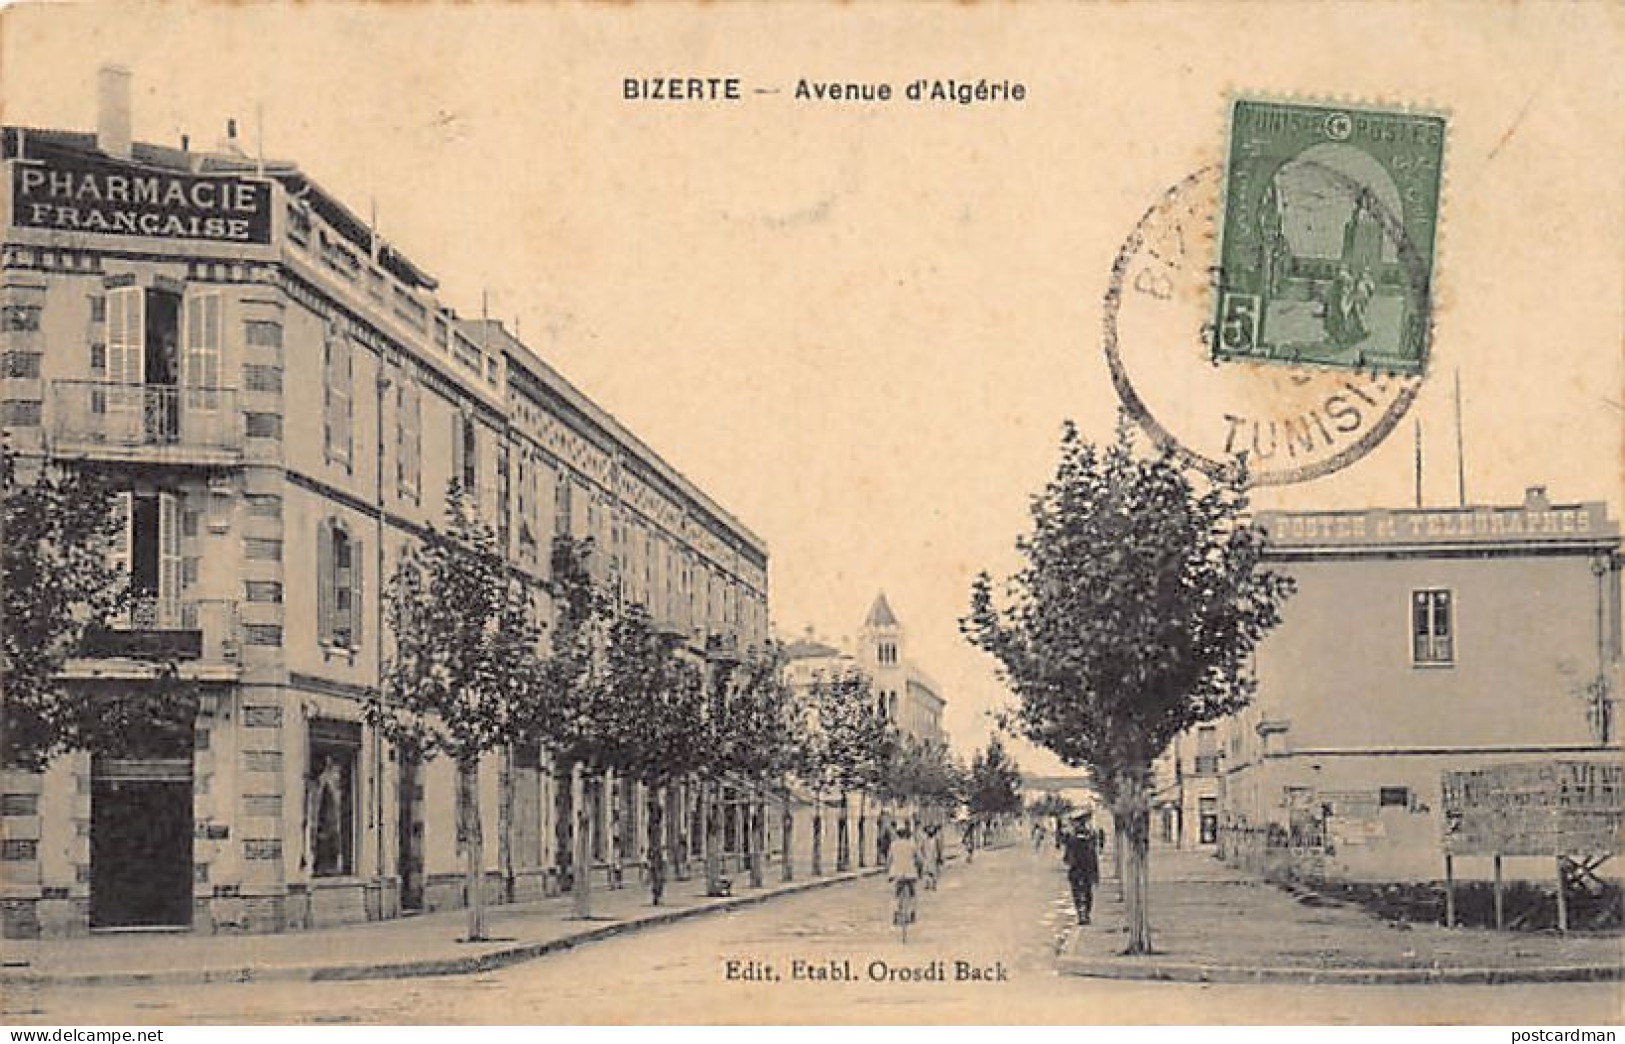 Tunisie - BIZERTE - Avenue D'Algérie - Pharmacie Française - Ed. Orosdi Back  - Tunesien